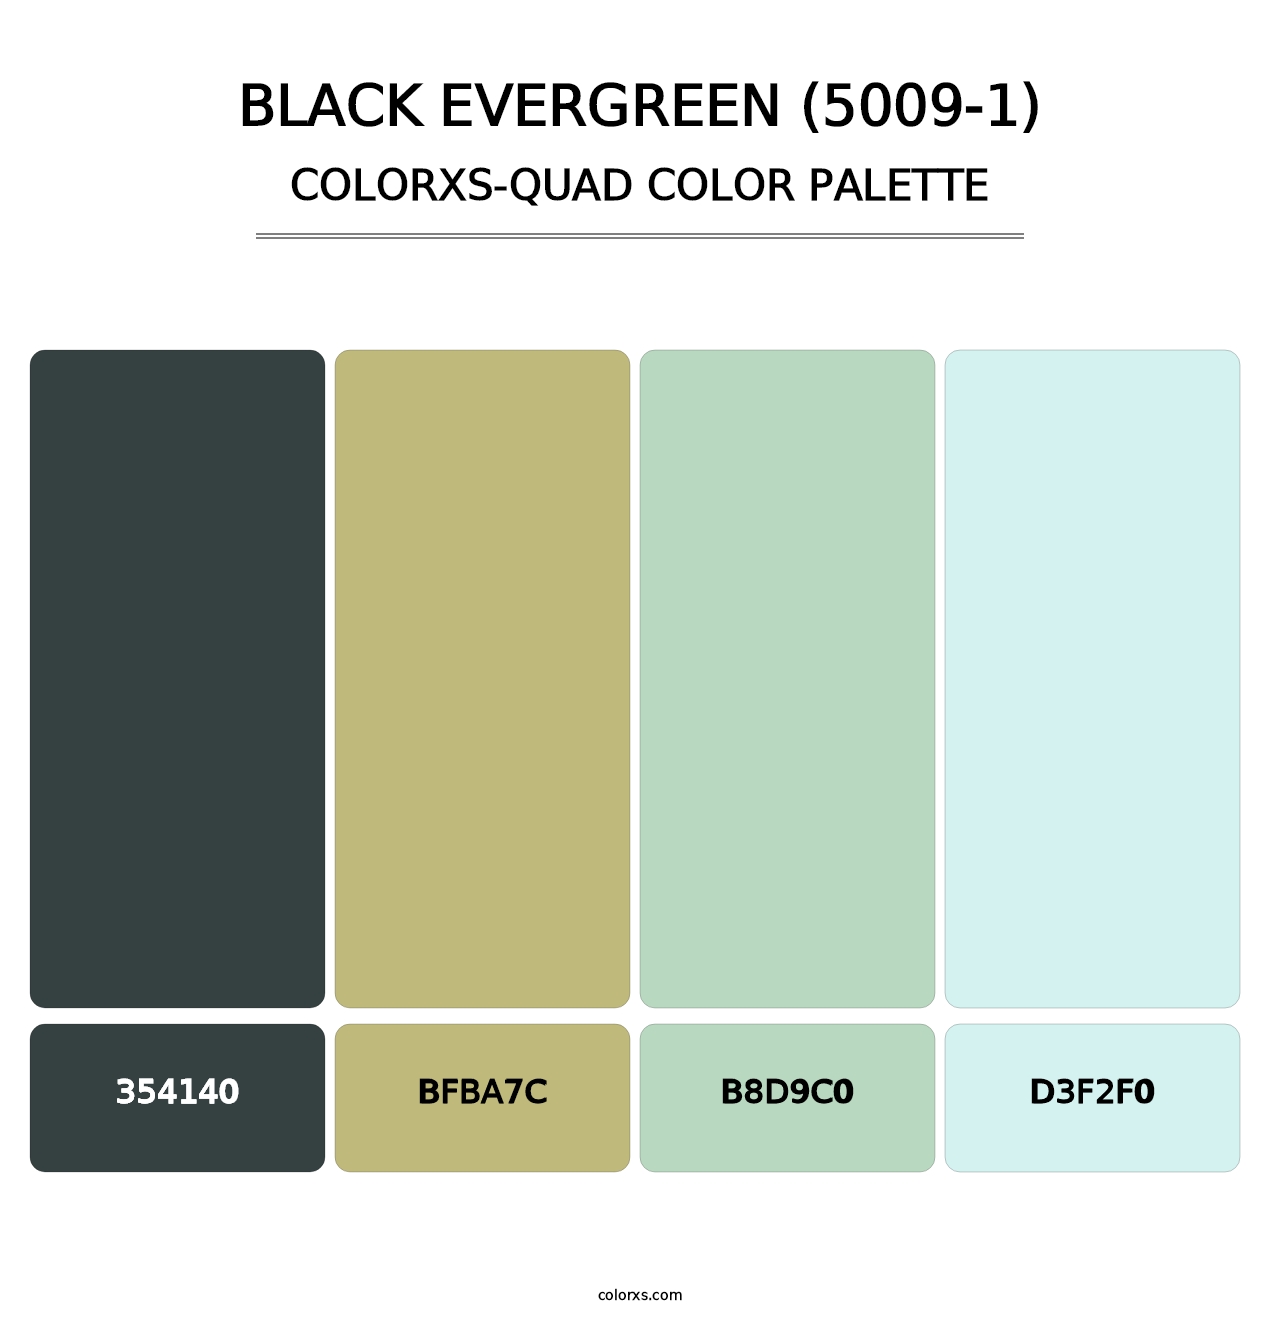 Black Evergreen (5009-1) - Colorxs Quad Palette